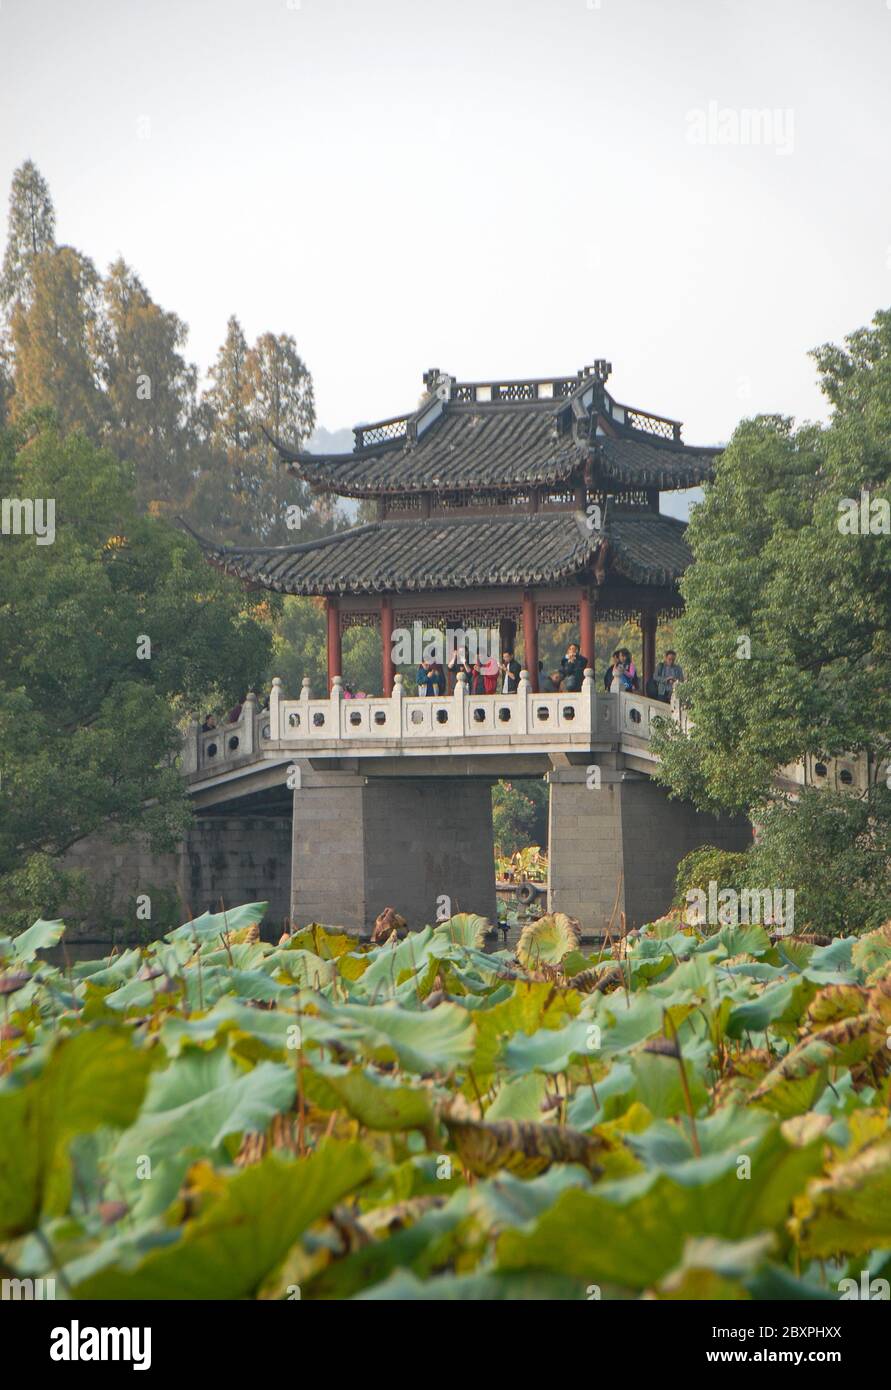 West Lake (Xi Hu) in Hangzhou, Zhejiang Province, China. Yudai bridge on West Lake, one of the famous symbols of Hangzhou city. Stock Photo